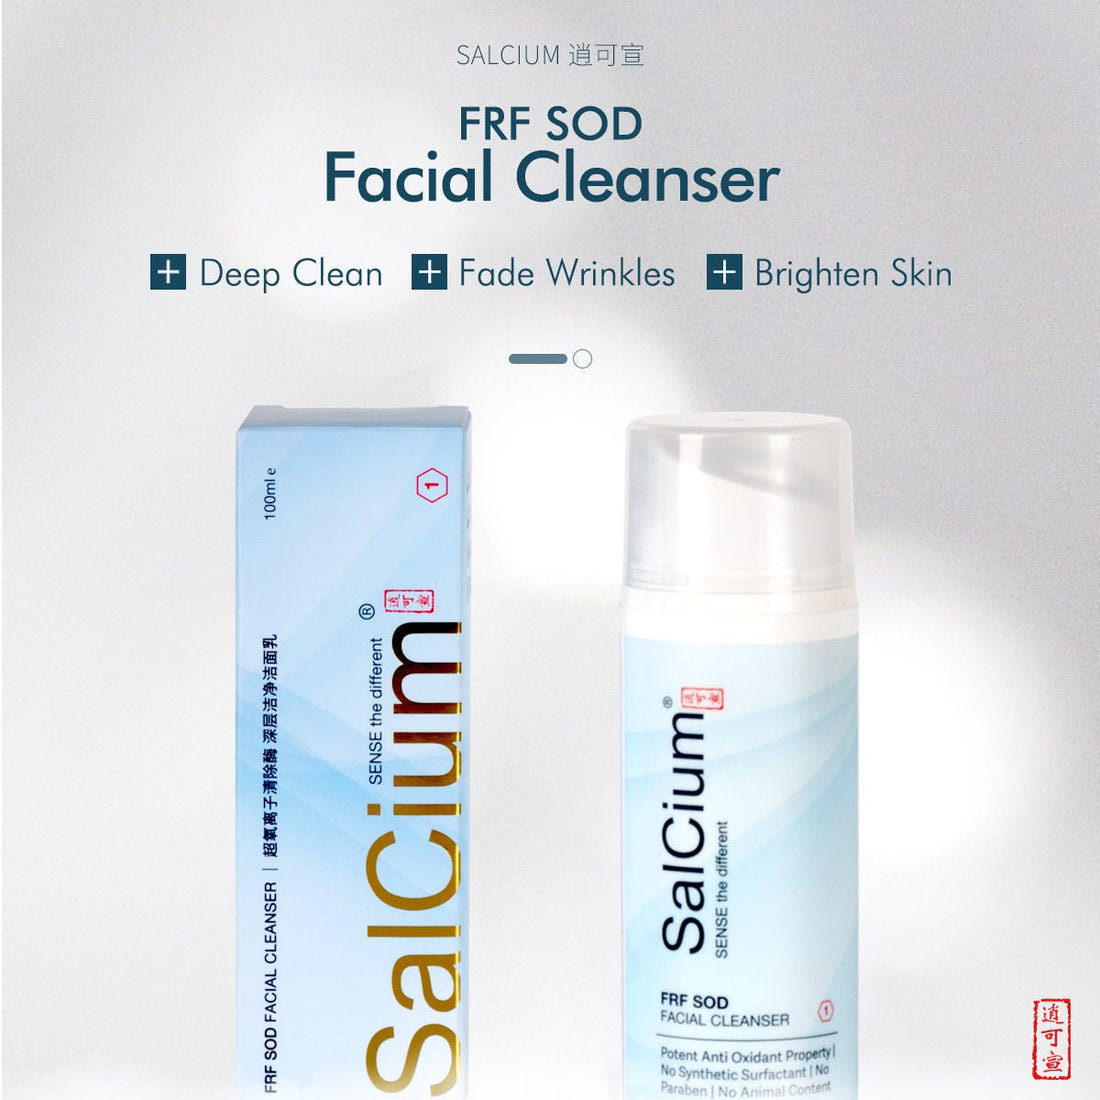 SalCium逍可宣隆重推出脸部护肤新产品 ！🌟焕活肌肤，重现年轻光彩！尽在 FRF SOD Facial Cleanser！🌟 - SALCIUM2U